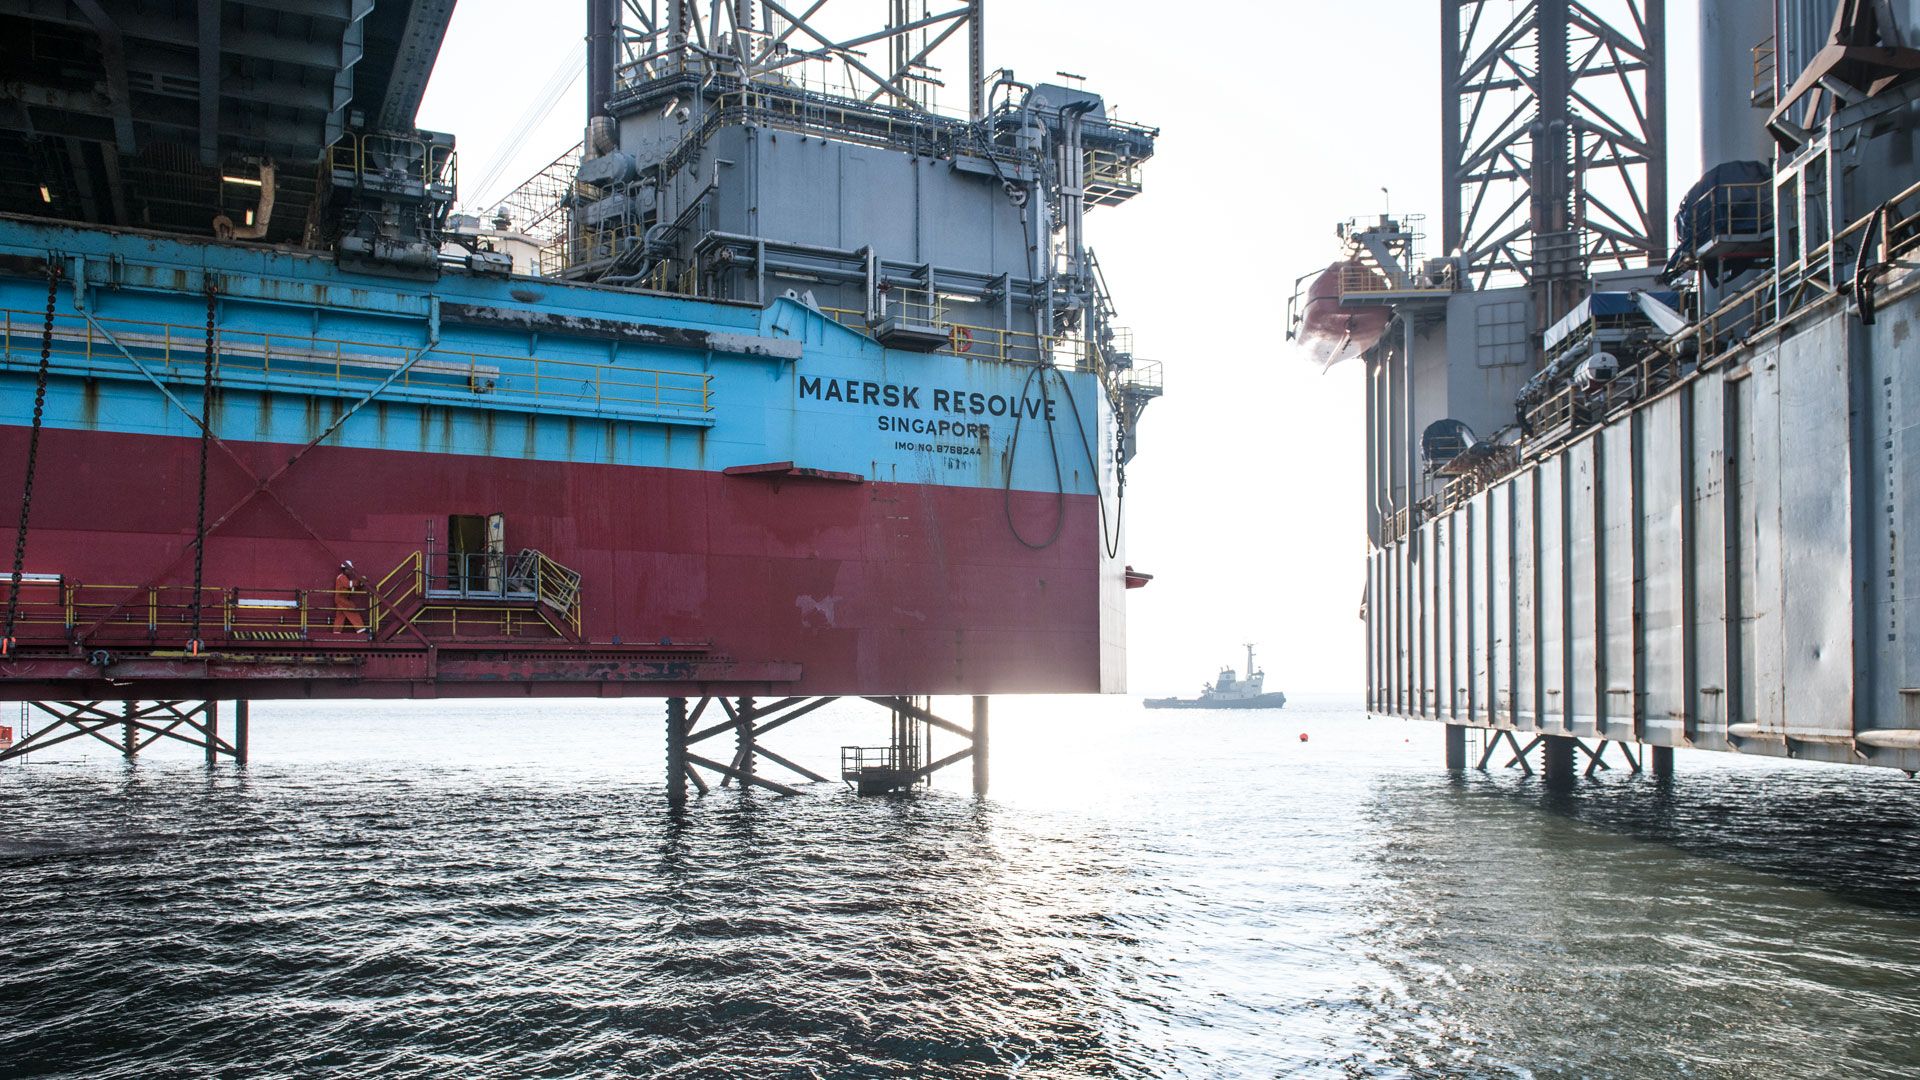 Wintershall Dea Denmark Maersk Resolve